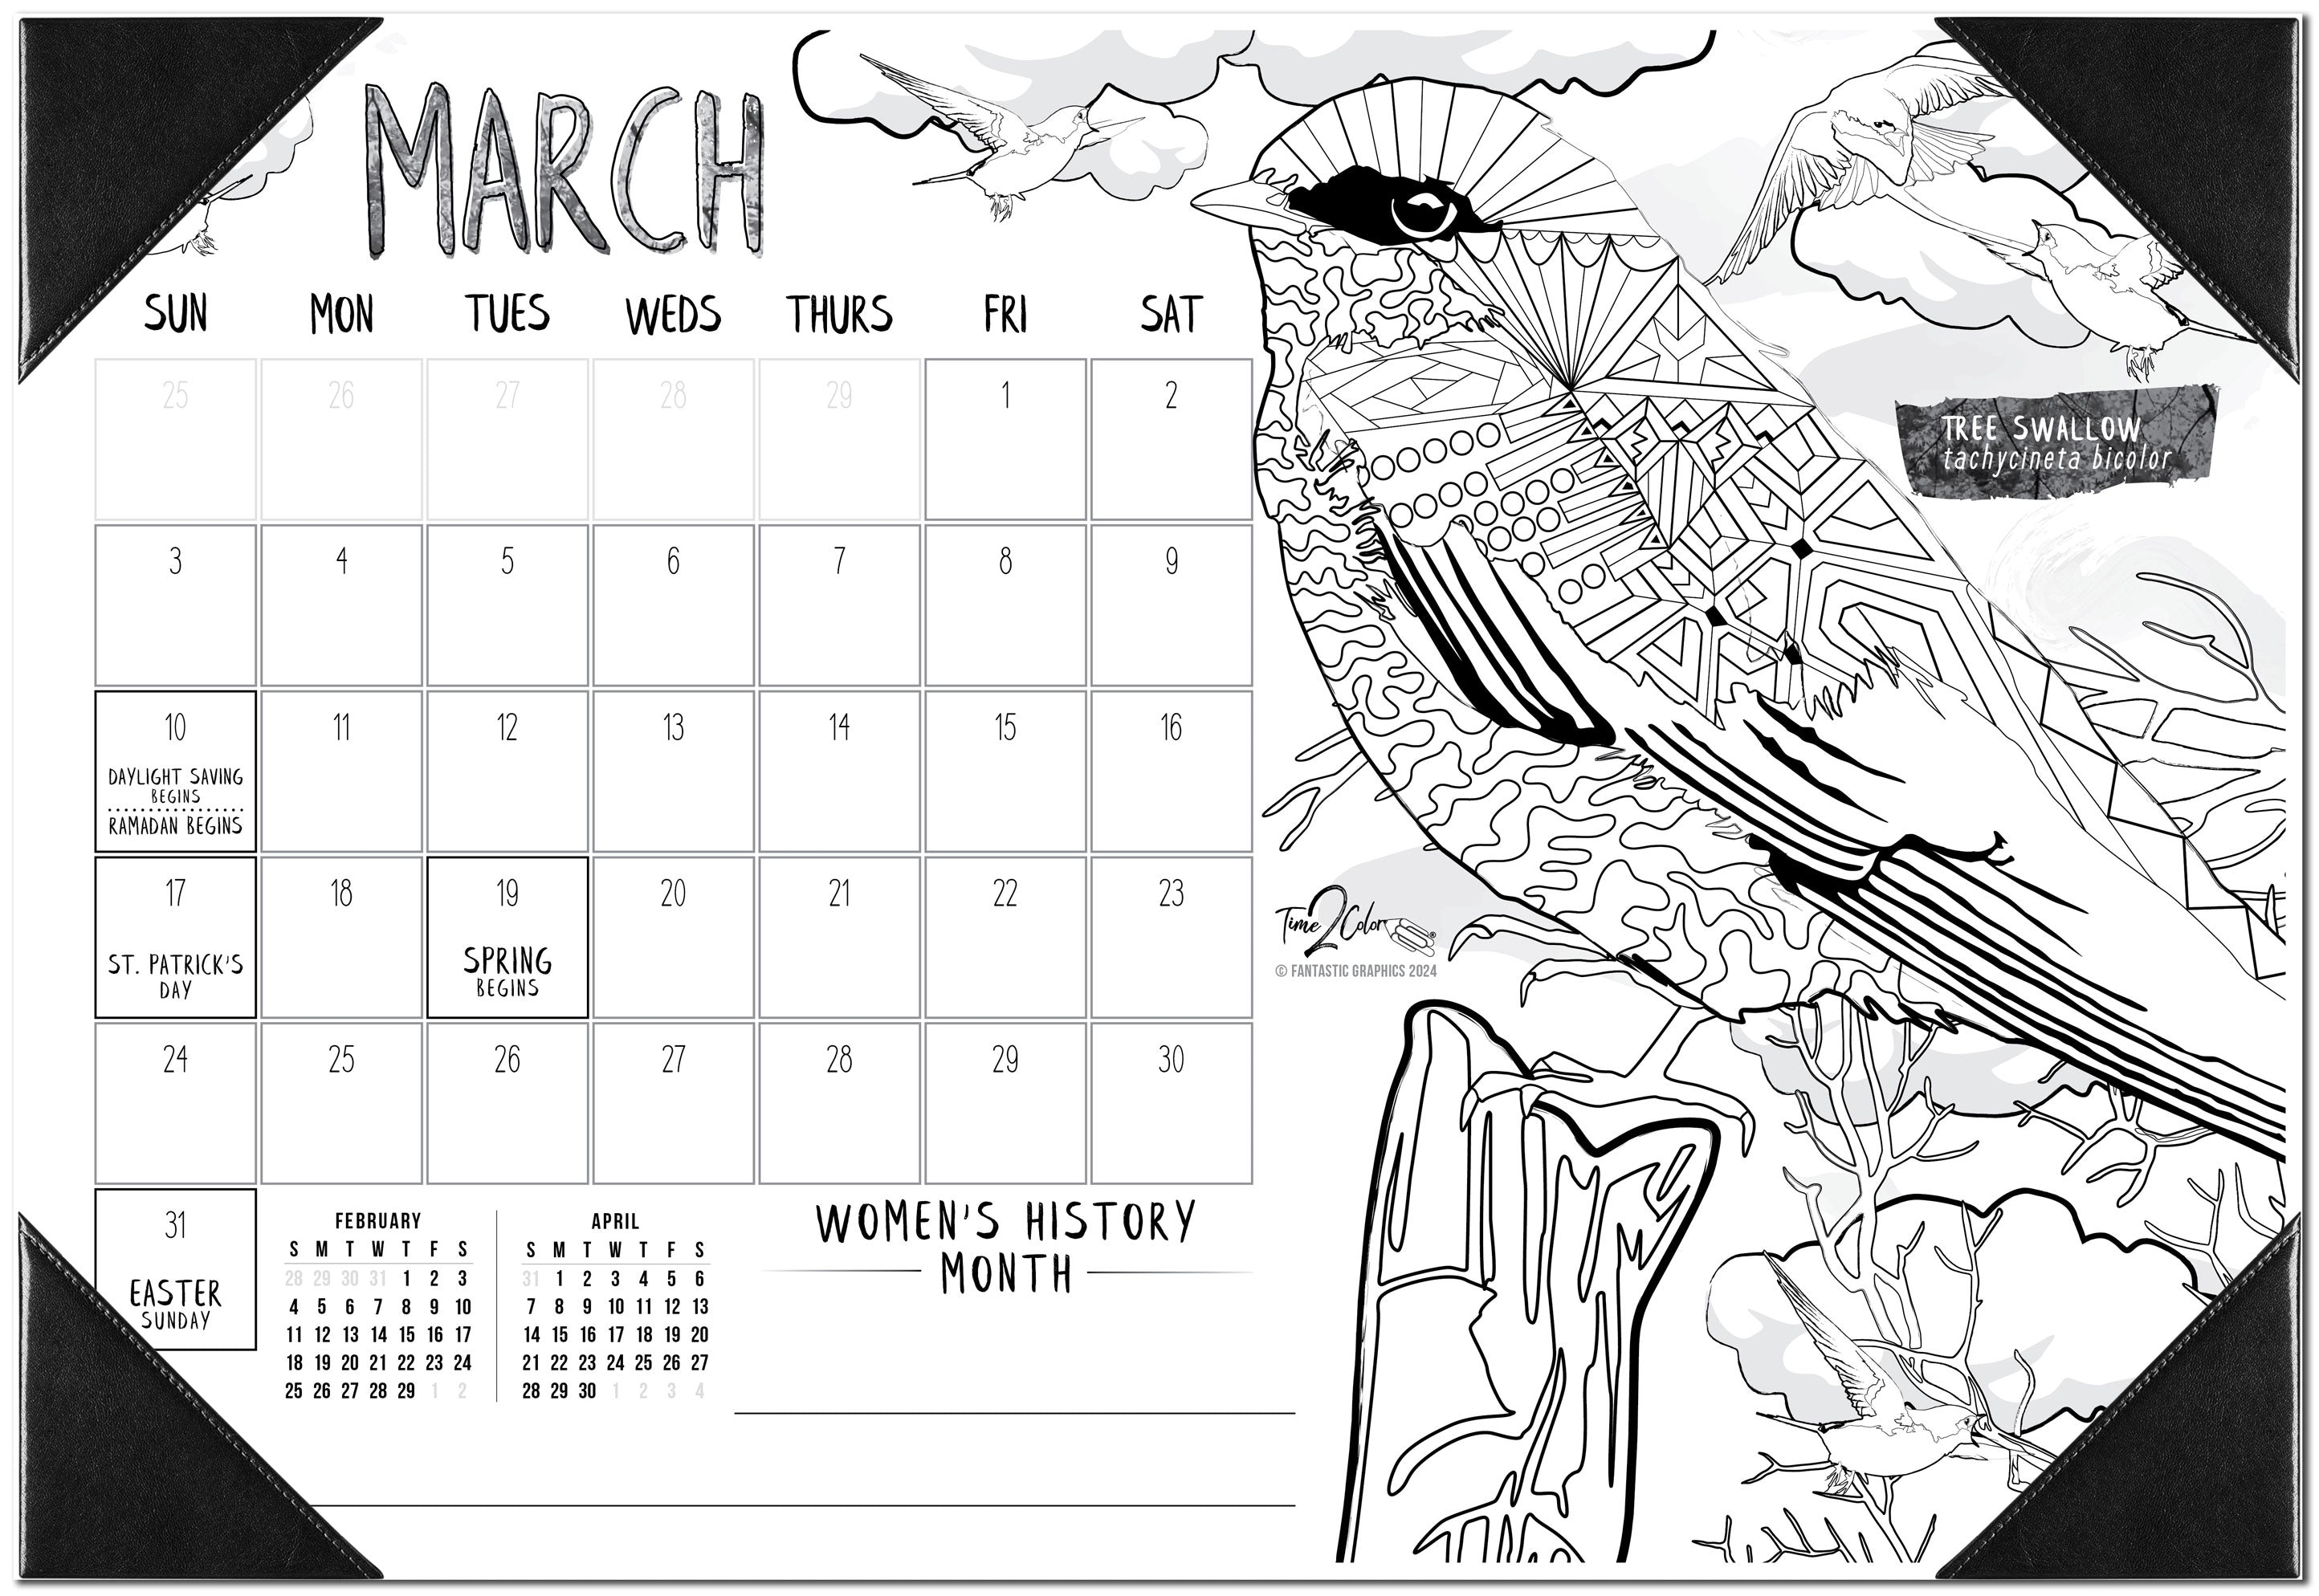 2024 Nature Theme Desk Blotter Coloring Calendar